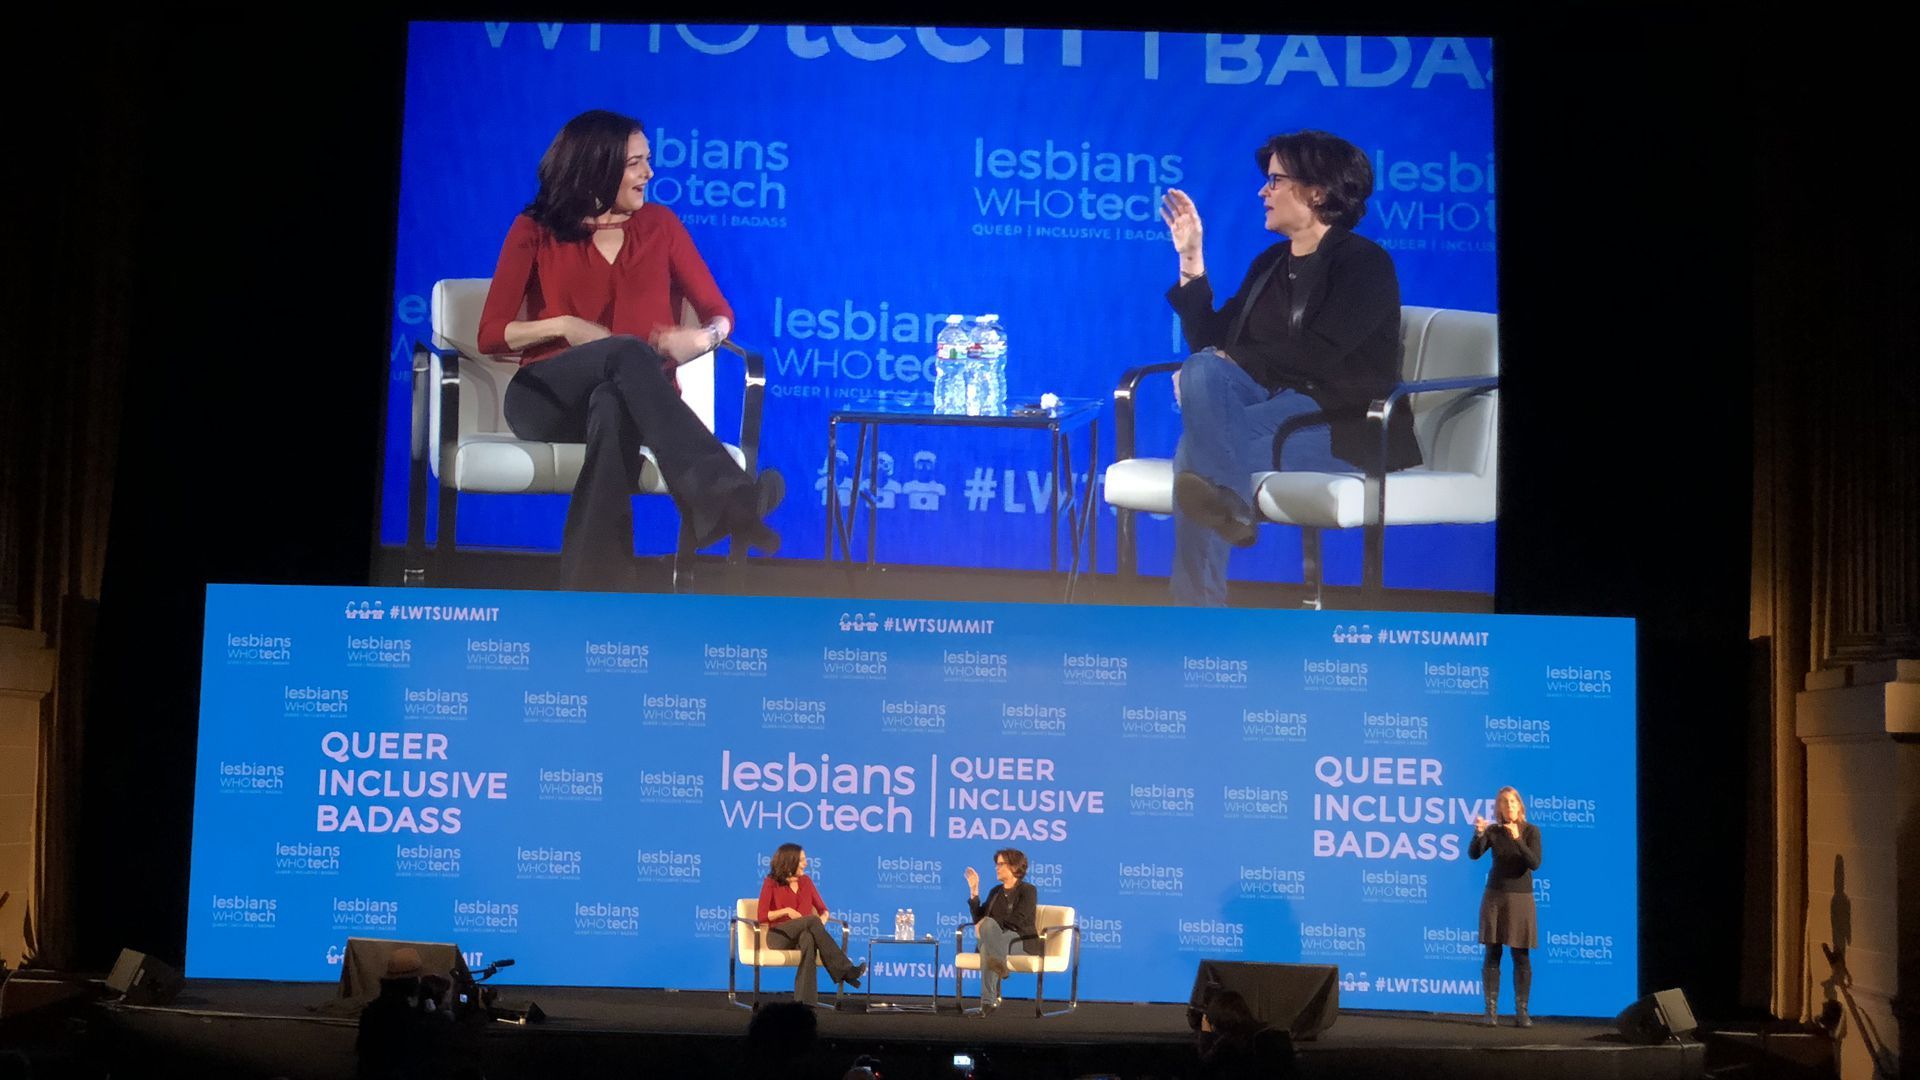 Facebook COO Sheryl Sandberg was interviewed by Recode's Kara Swisher. 